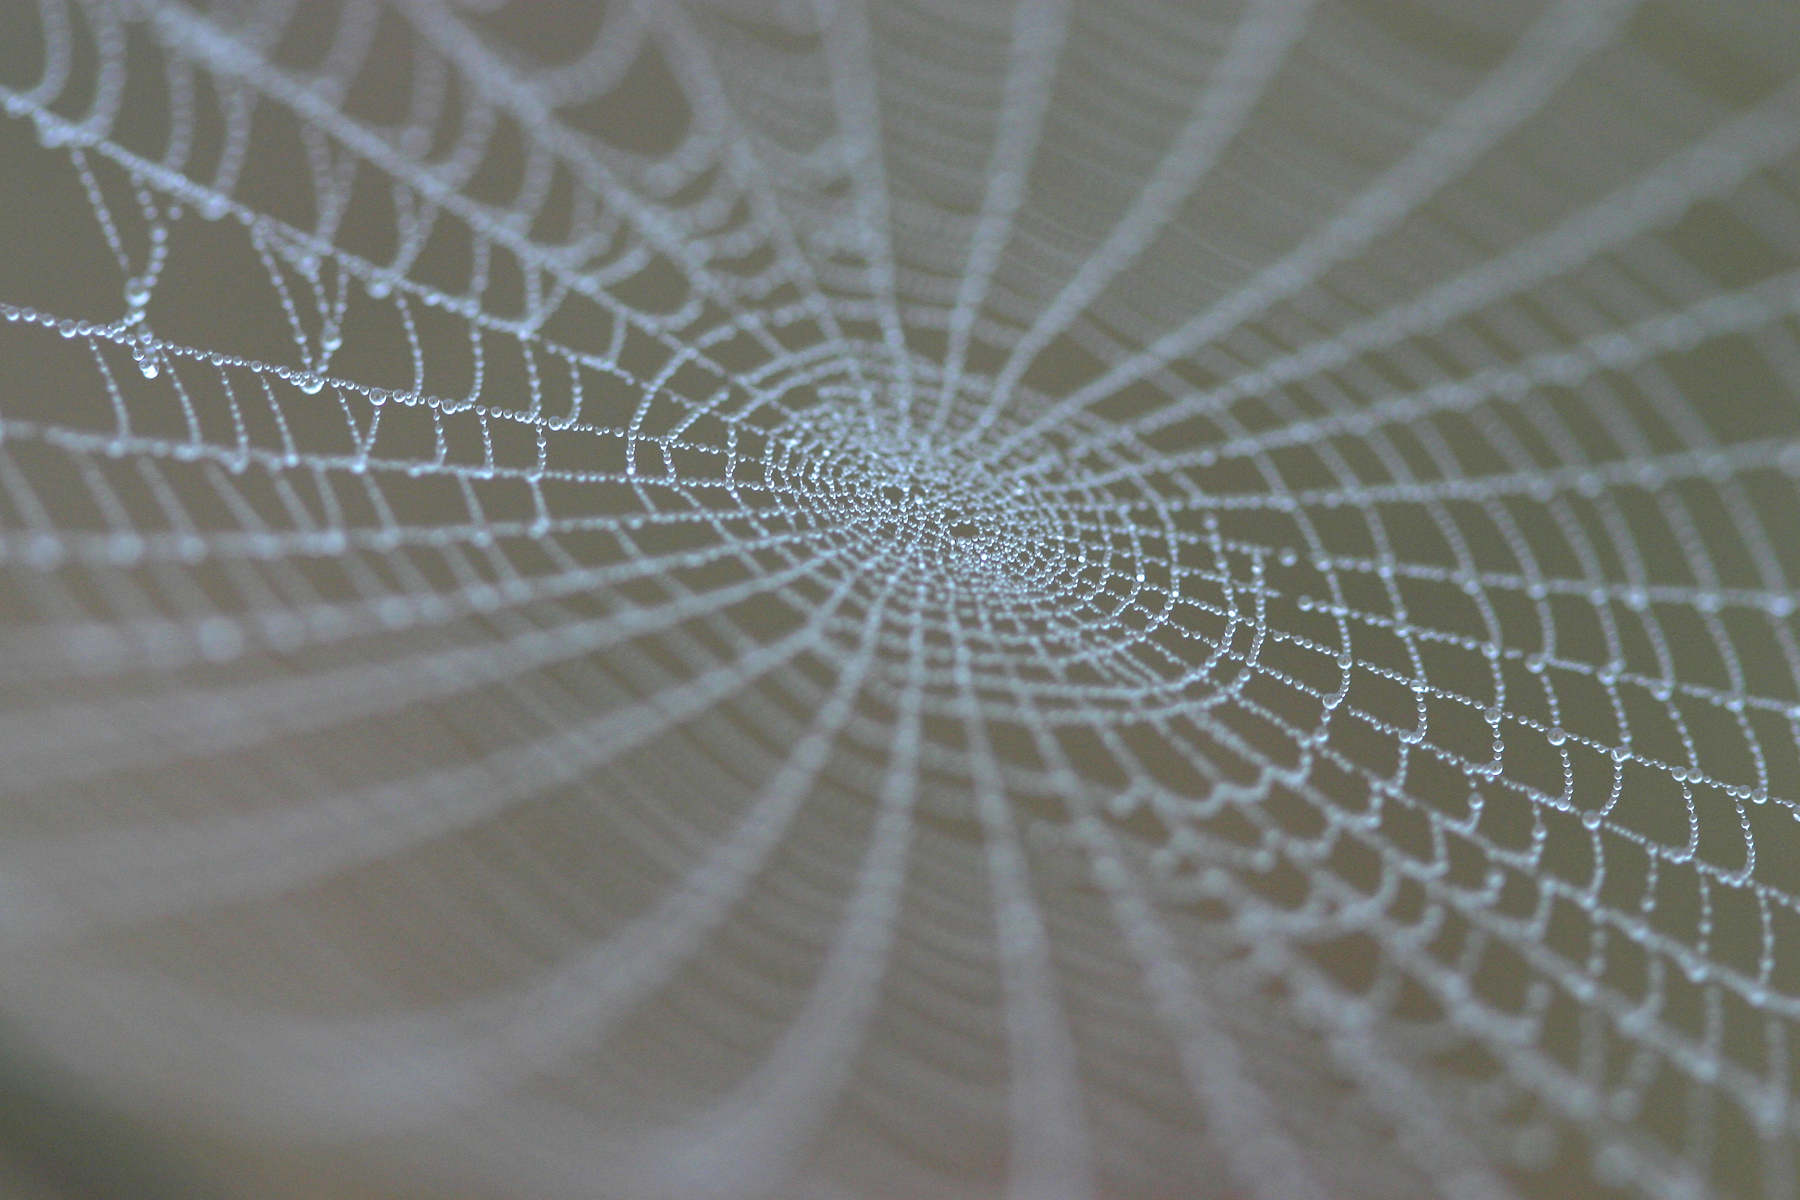 Where do cobwebs come from?